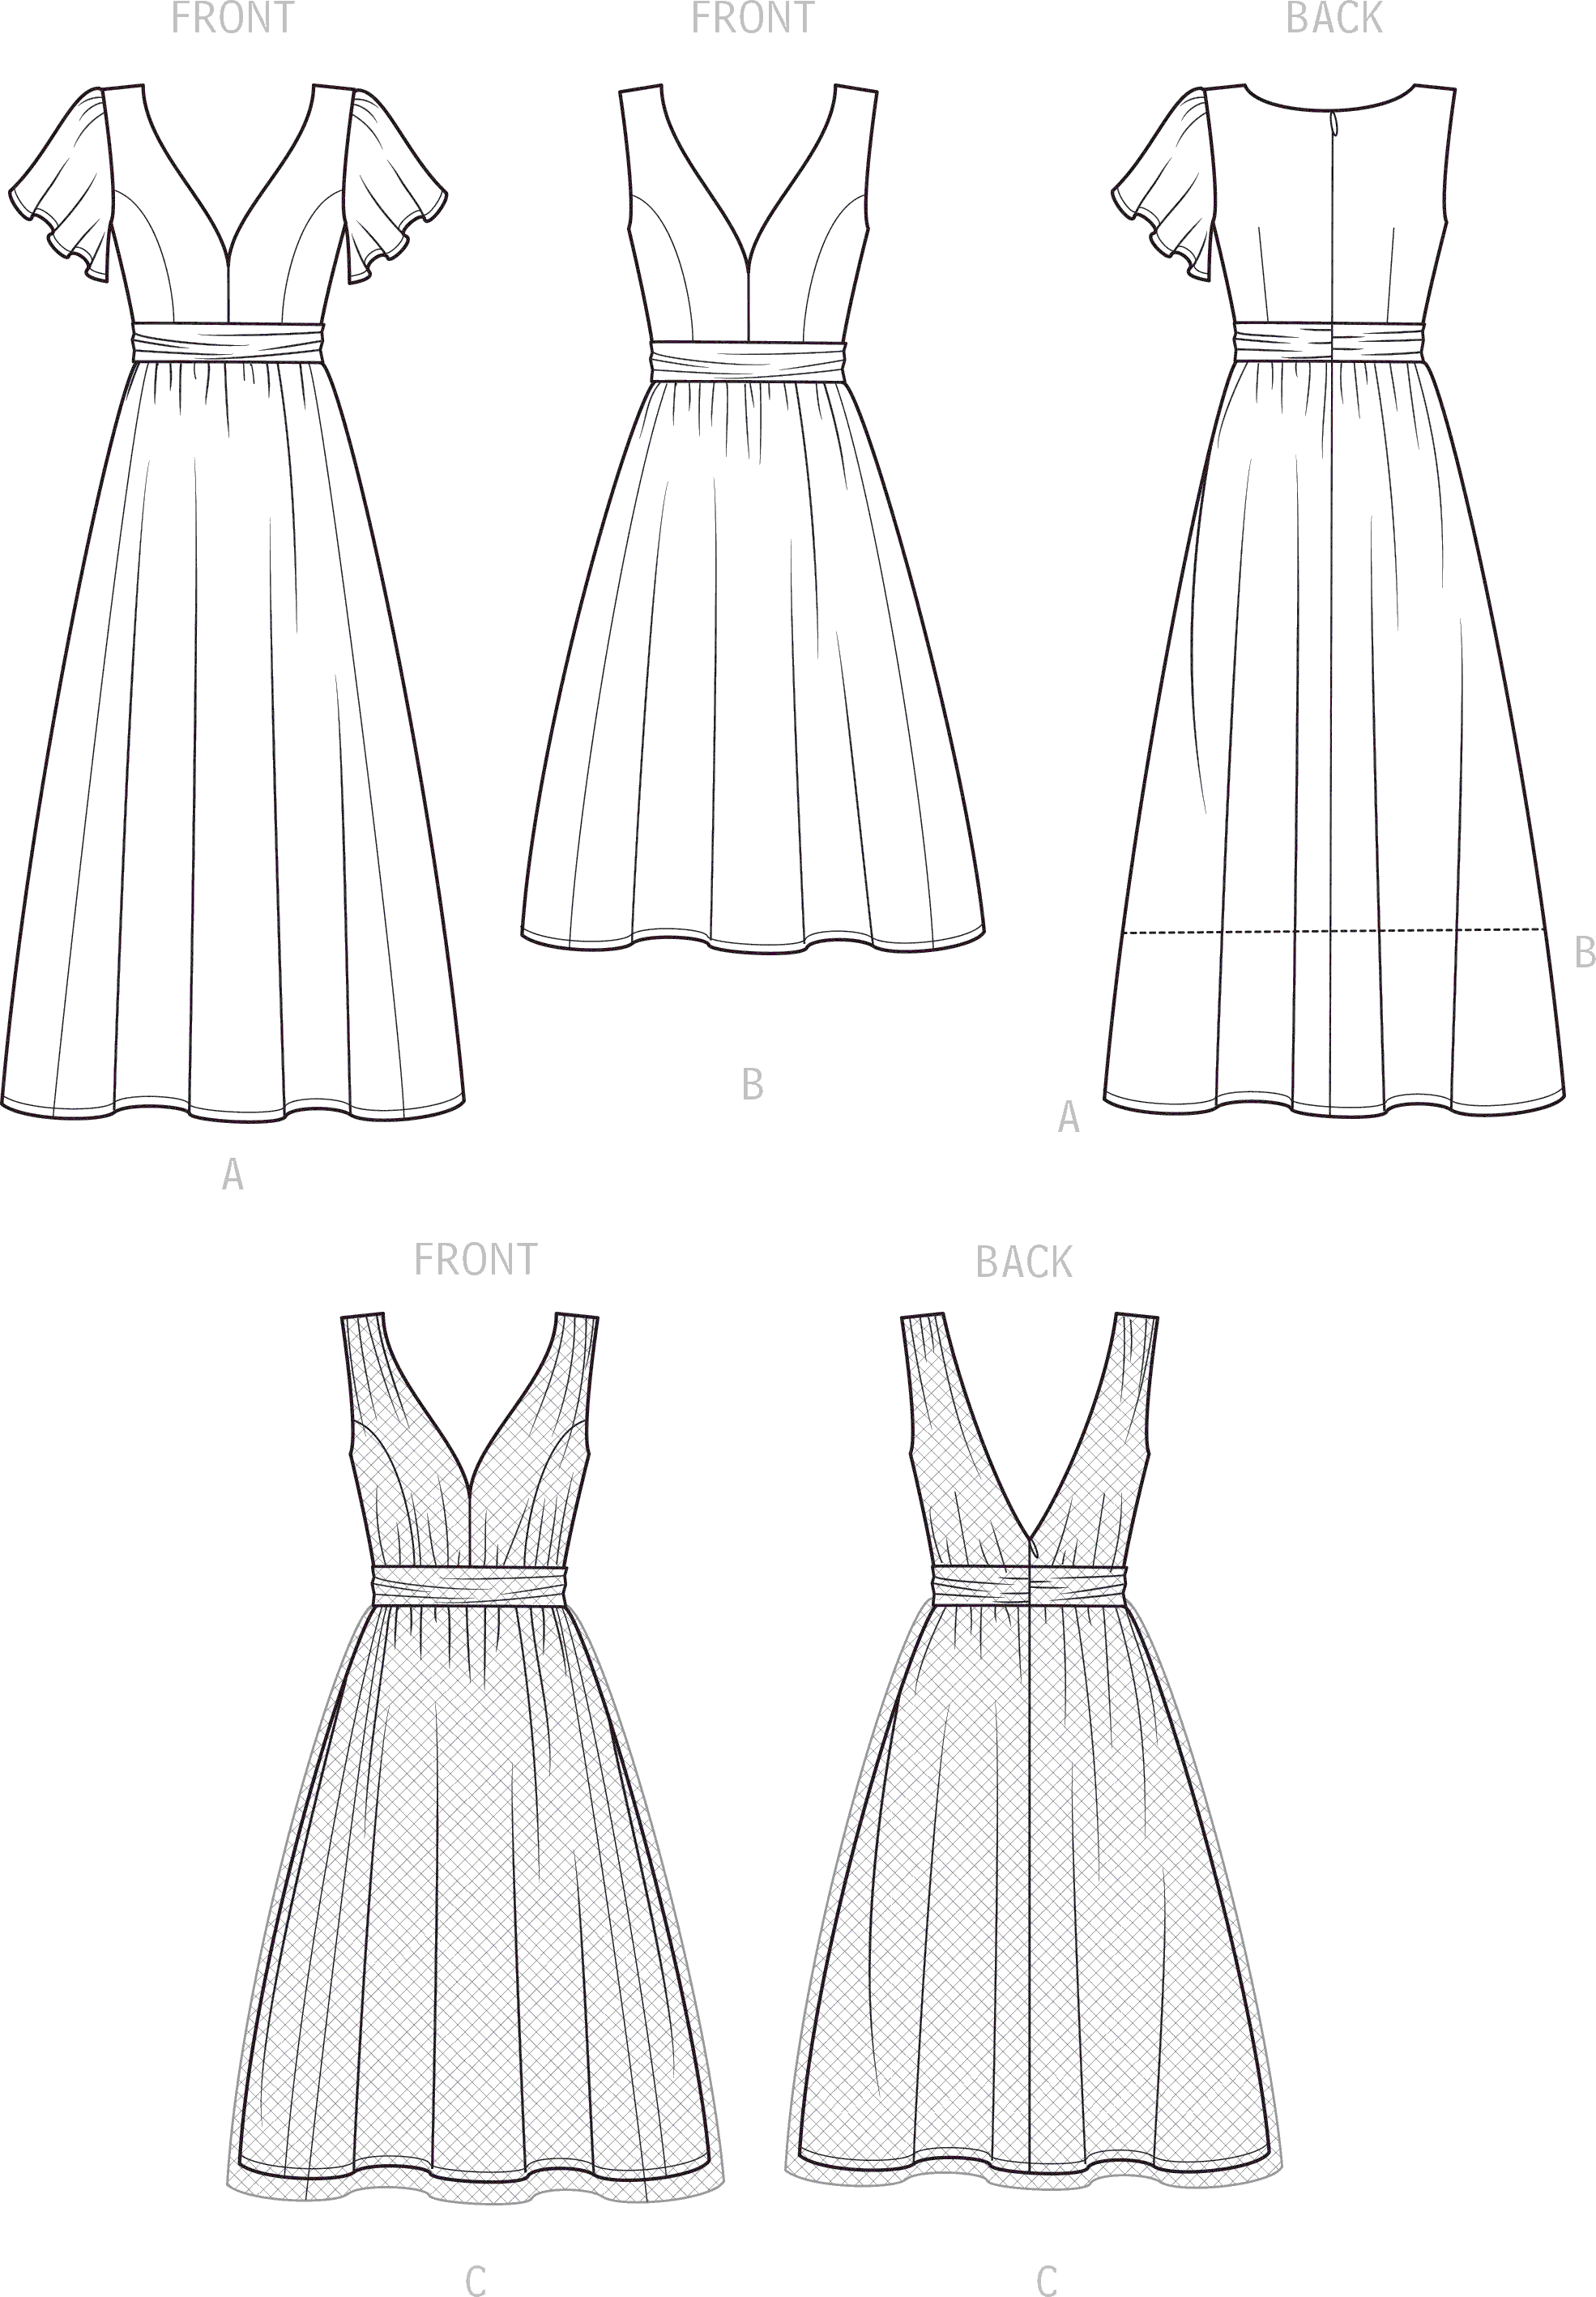 Simplicity Sewing Pattern S9475 Misses Dresses 9475 Line Art From Patternsandplains.com